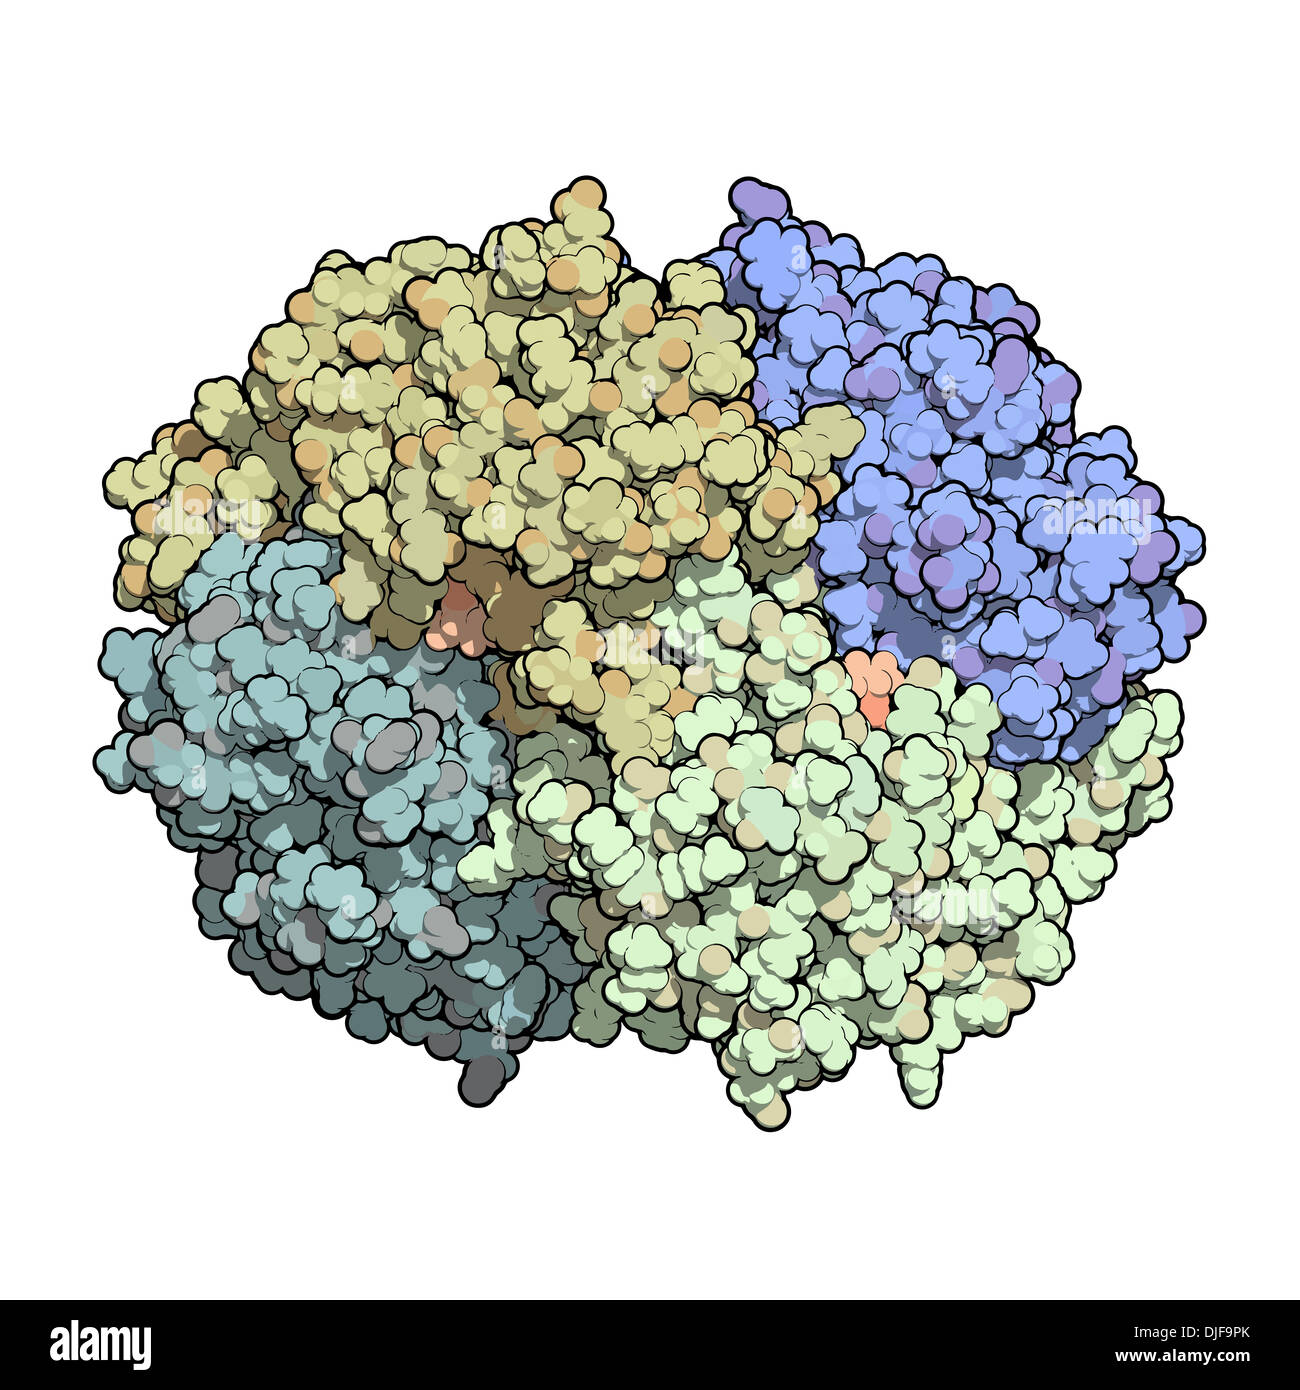 Asparaginase enzyme molecule. Used in leukemia treatment (crisantaspase). Atoms shown as spheres. Coloring: per chain. Stock Photo